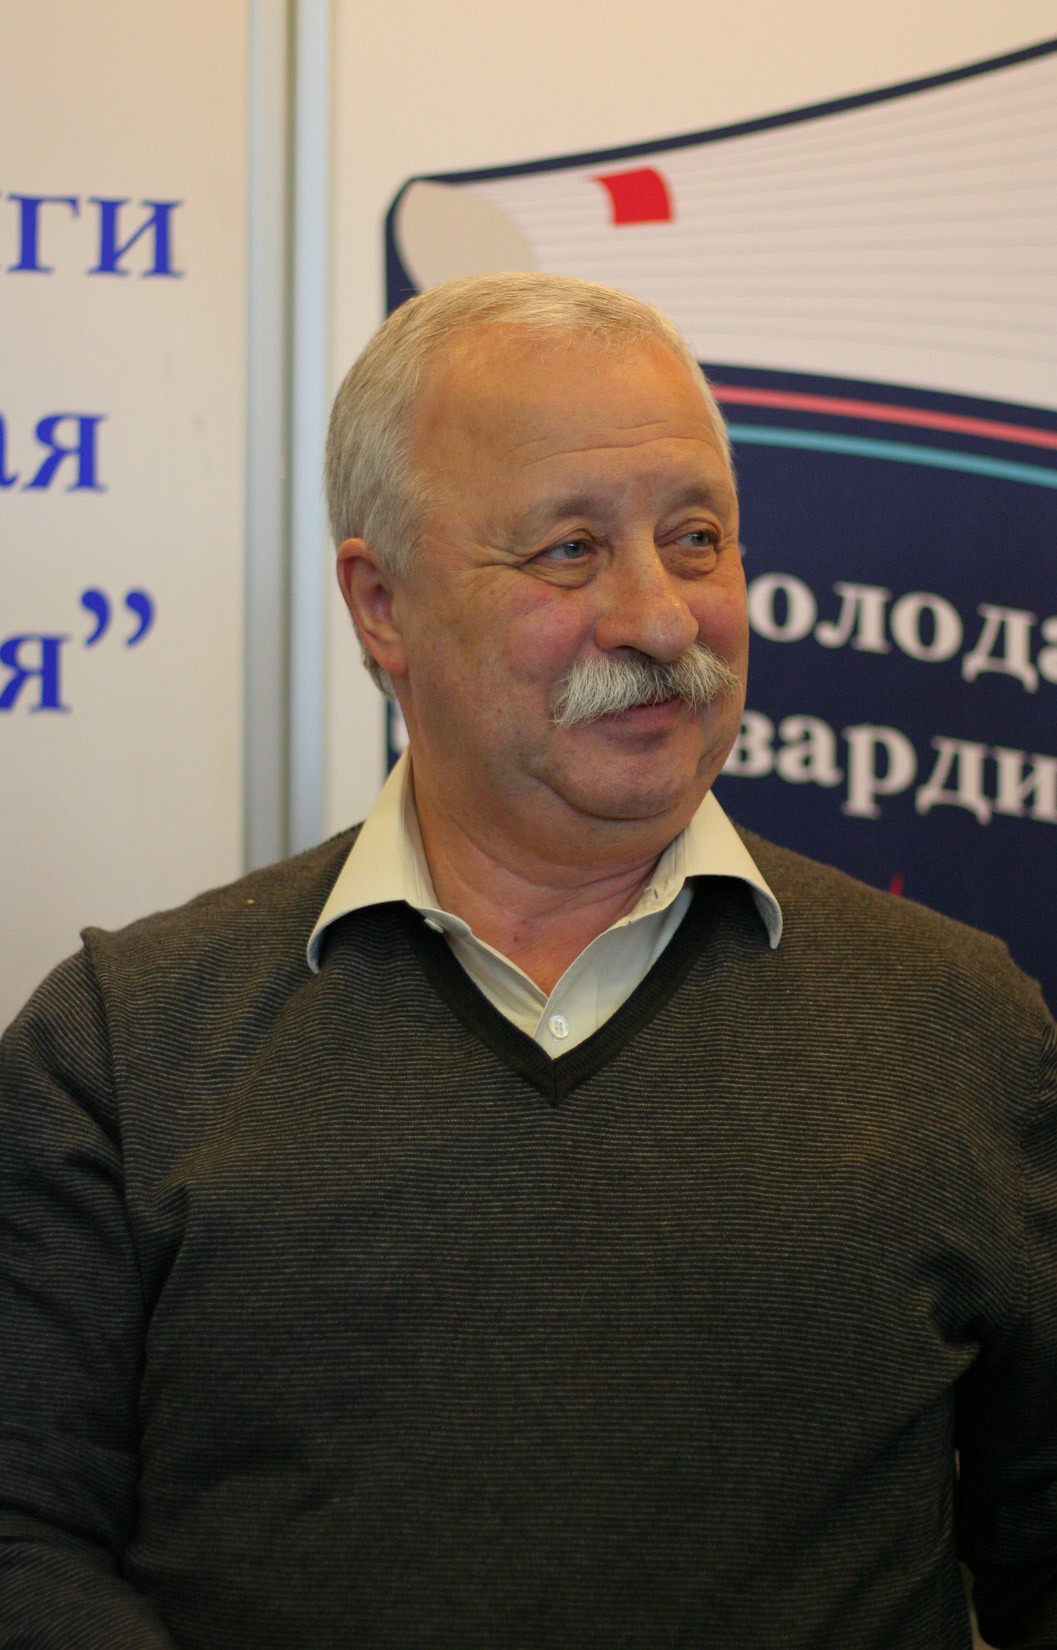 Леонид Якубович (Leonid Yakubovich)